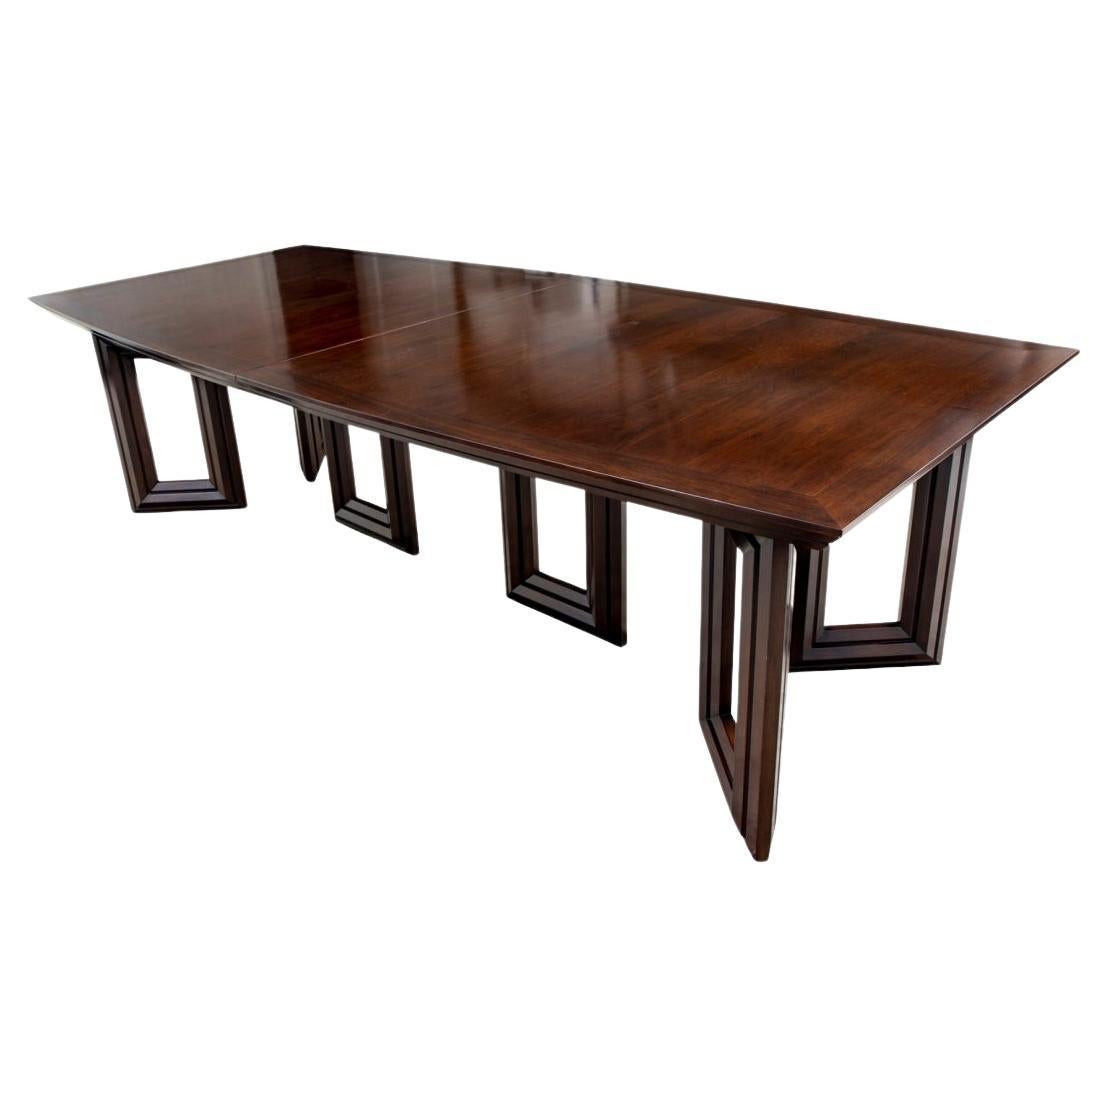 Elegant Mahogany Dining Room Table From John Rosselli